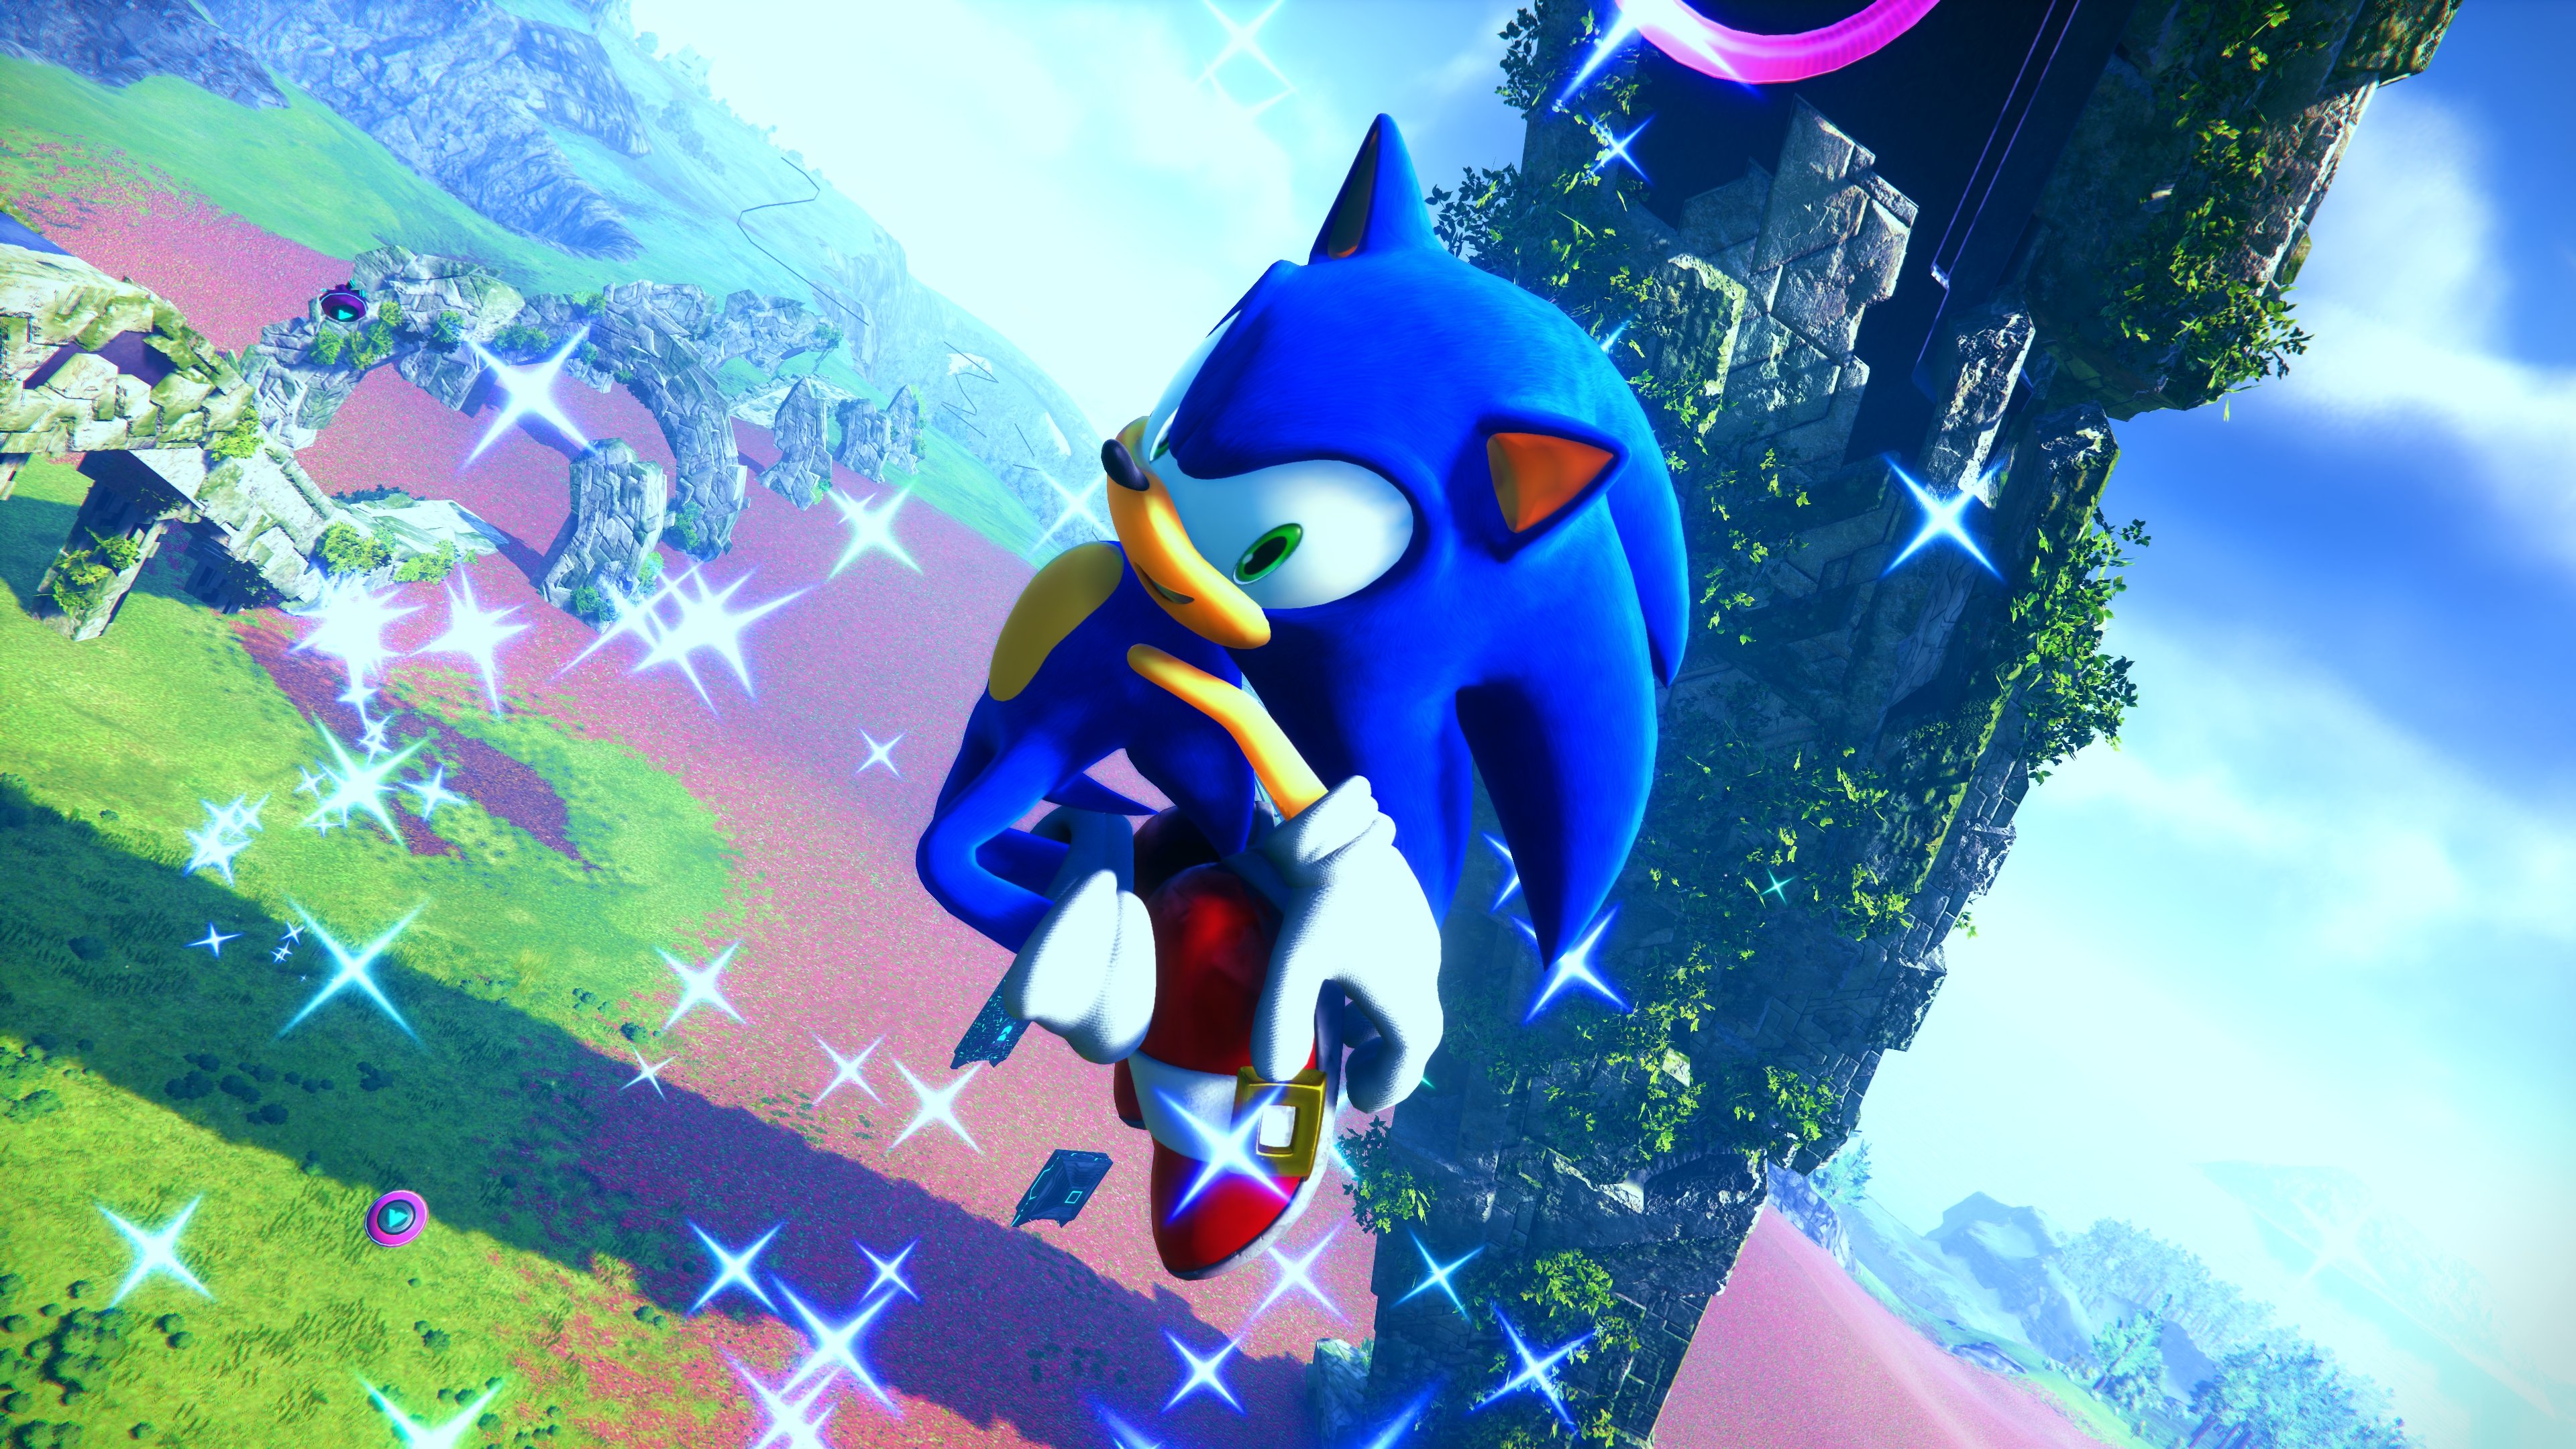 Sega unveils Sonic Frontiers DLC roadmap for 2023